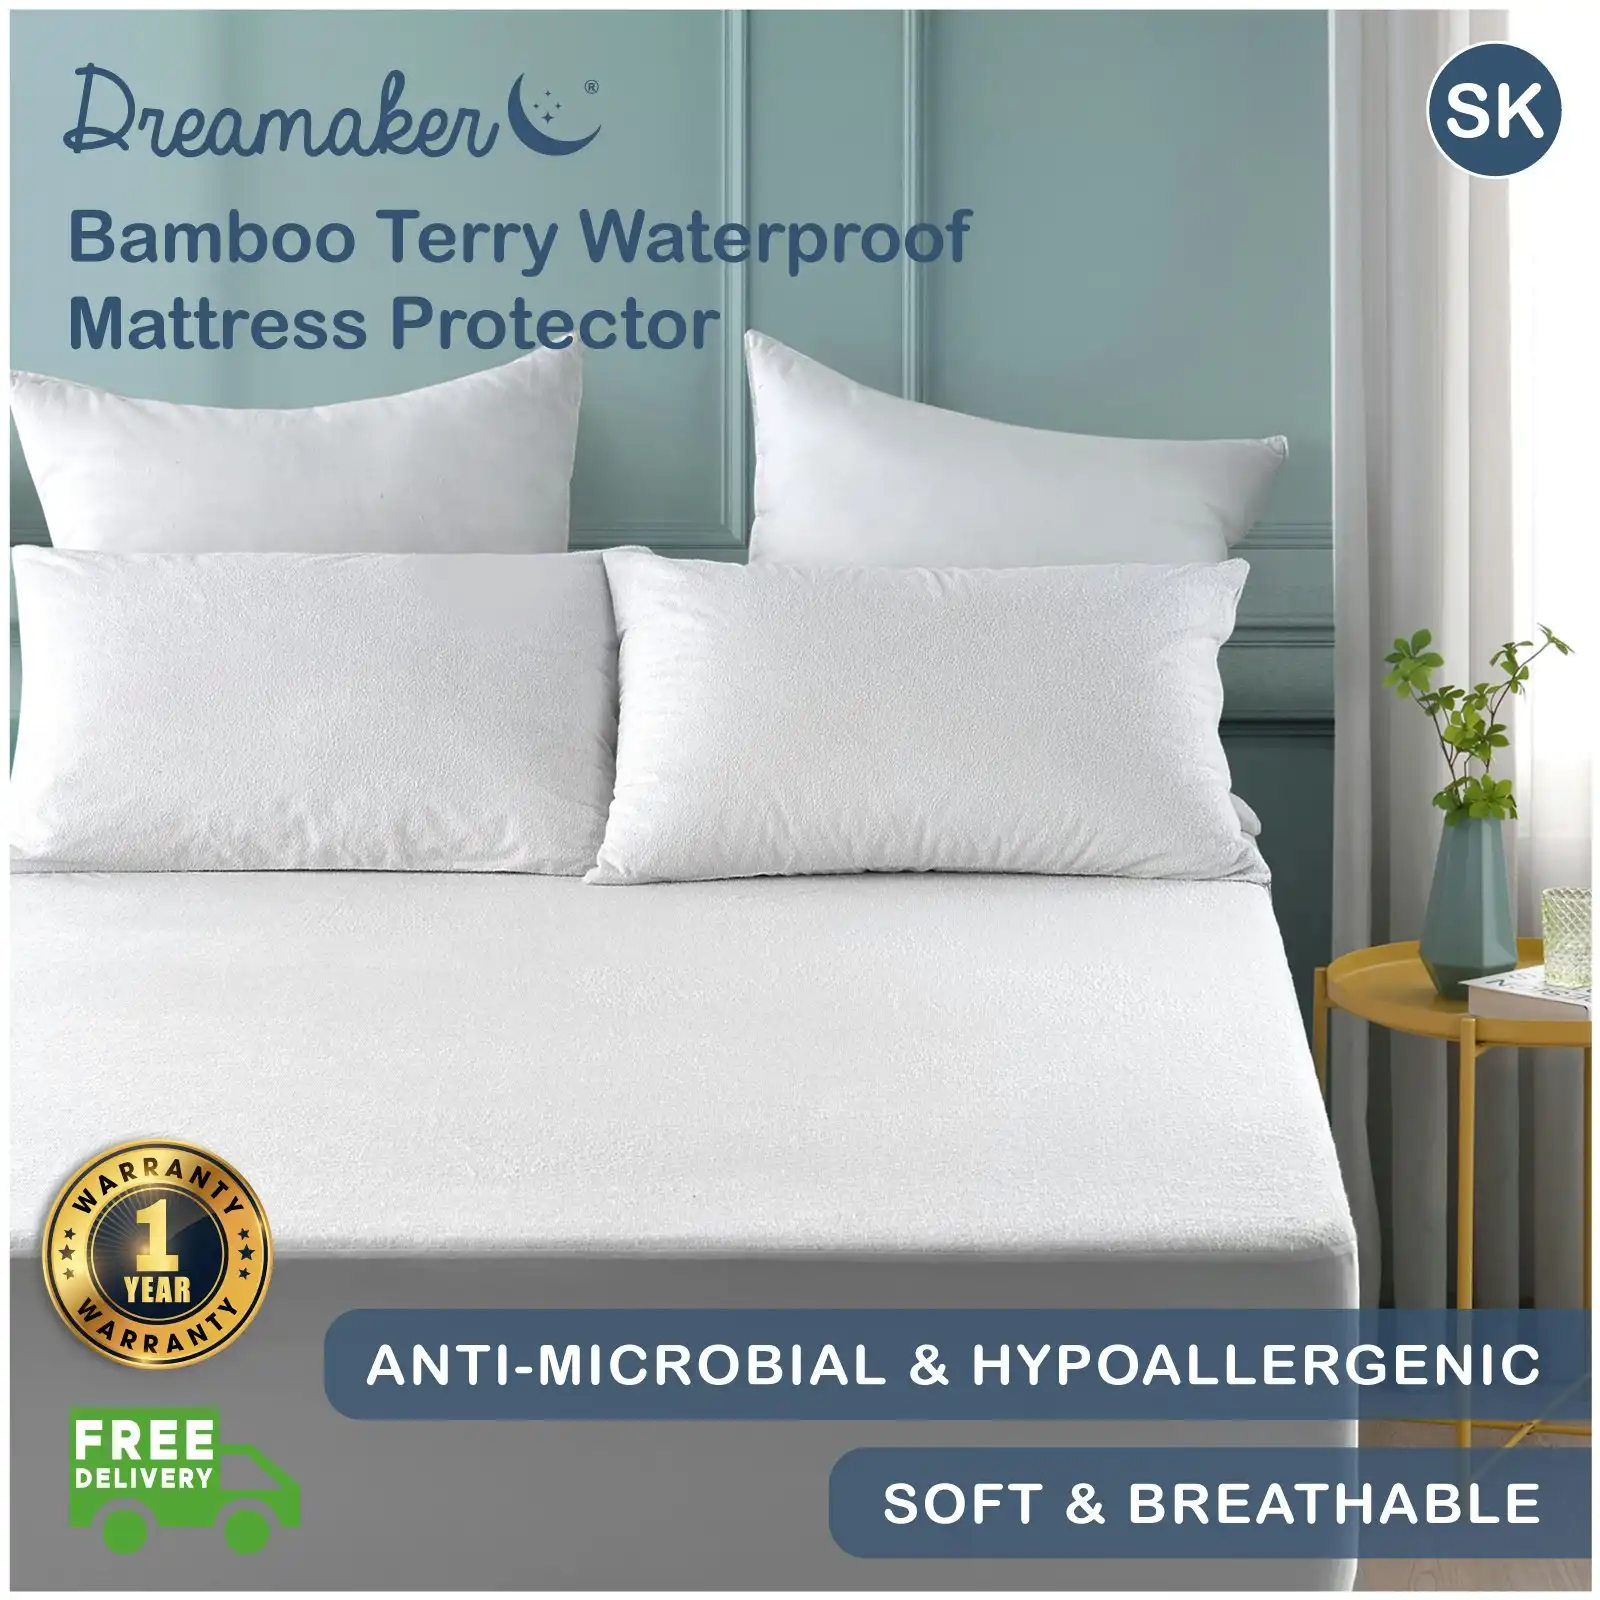 9009433 Dreamaker Bamboo Terry Waterproof  Mattress Protector - Super King Bed